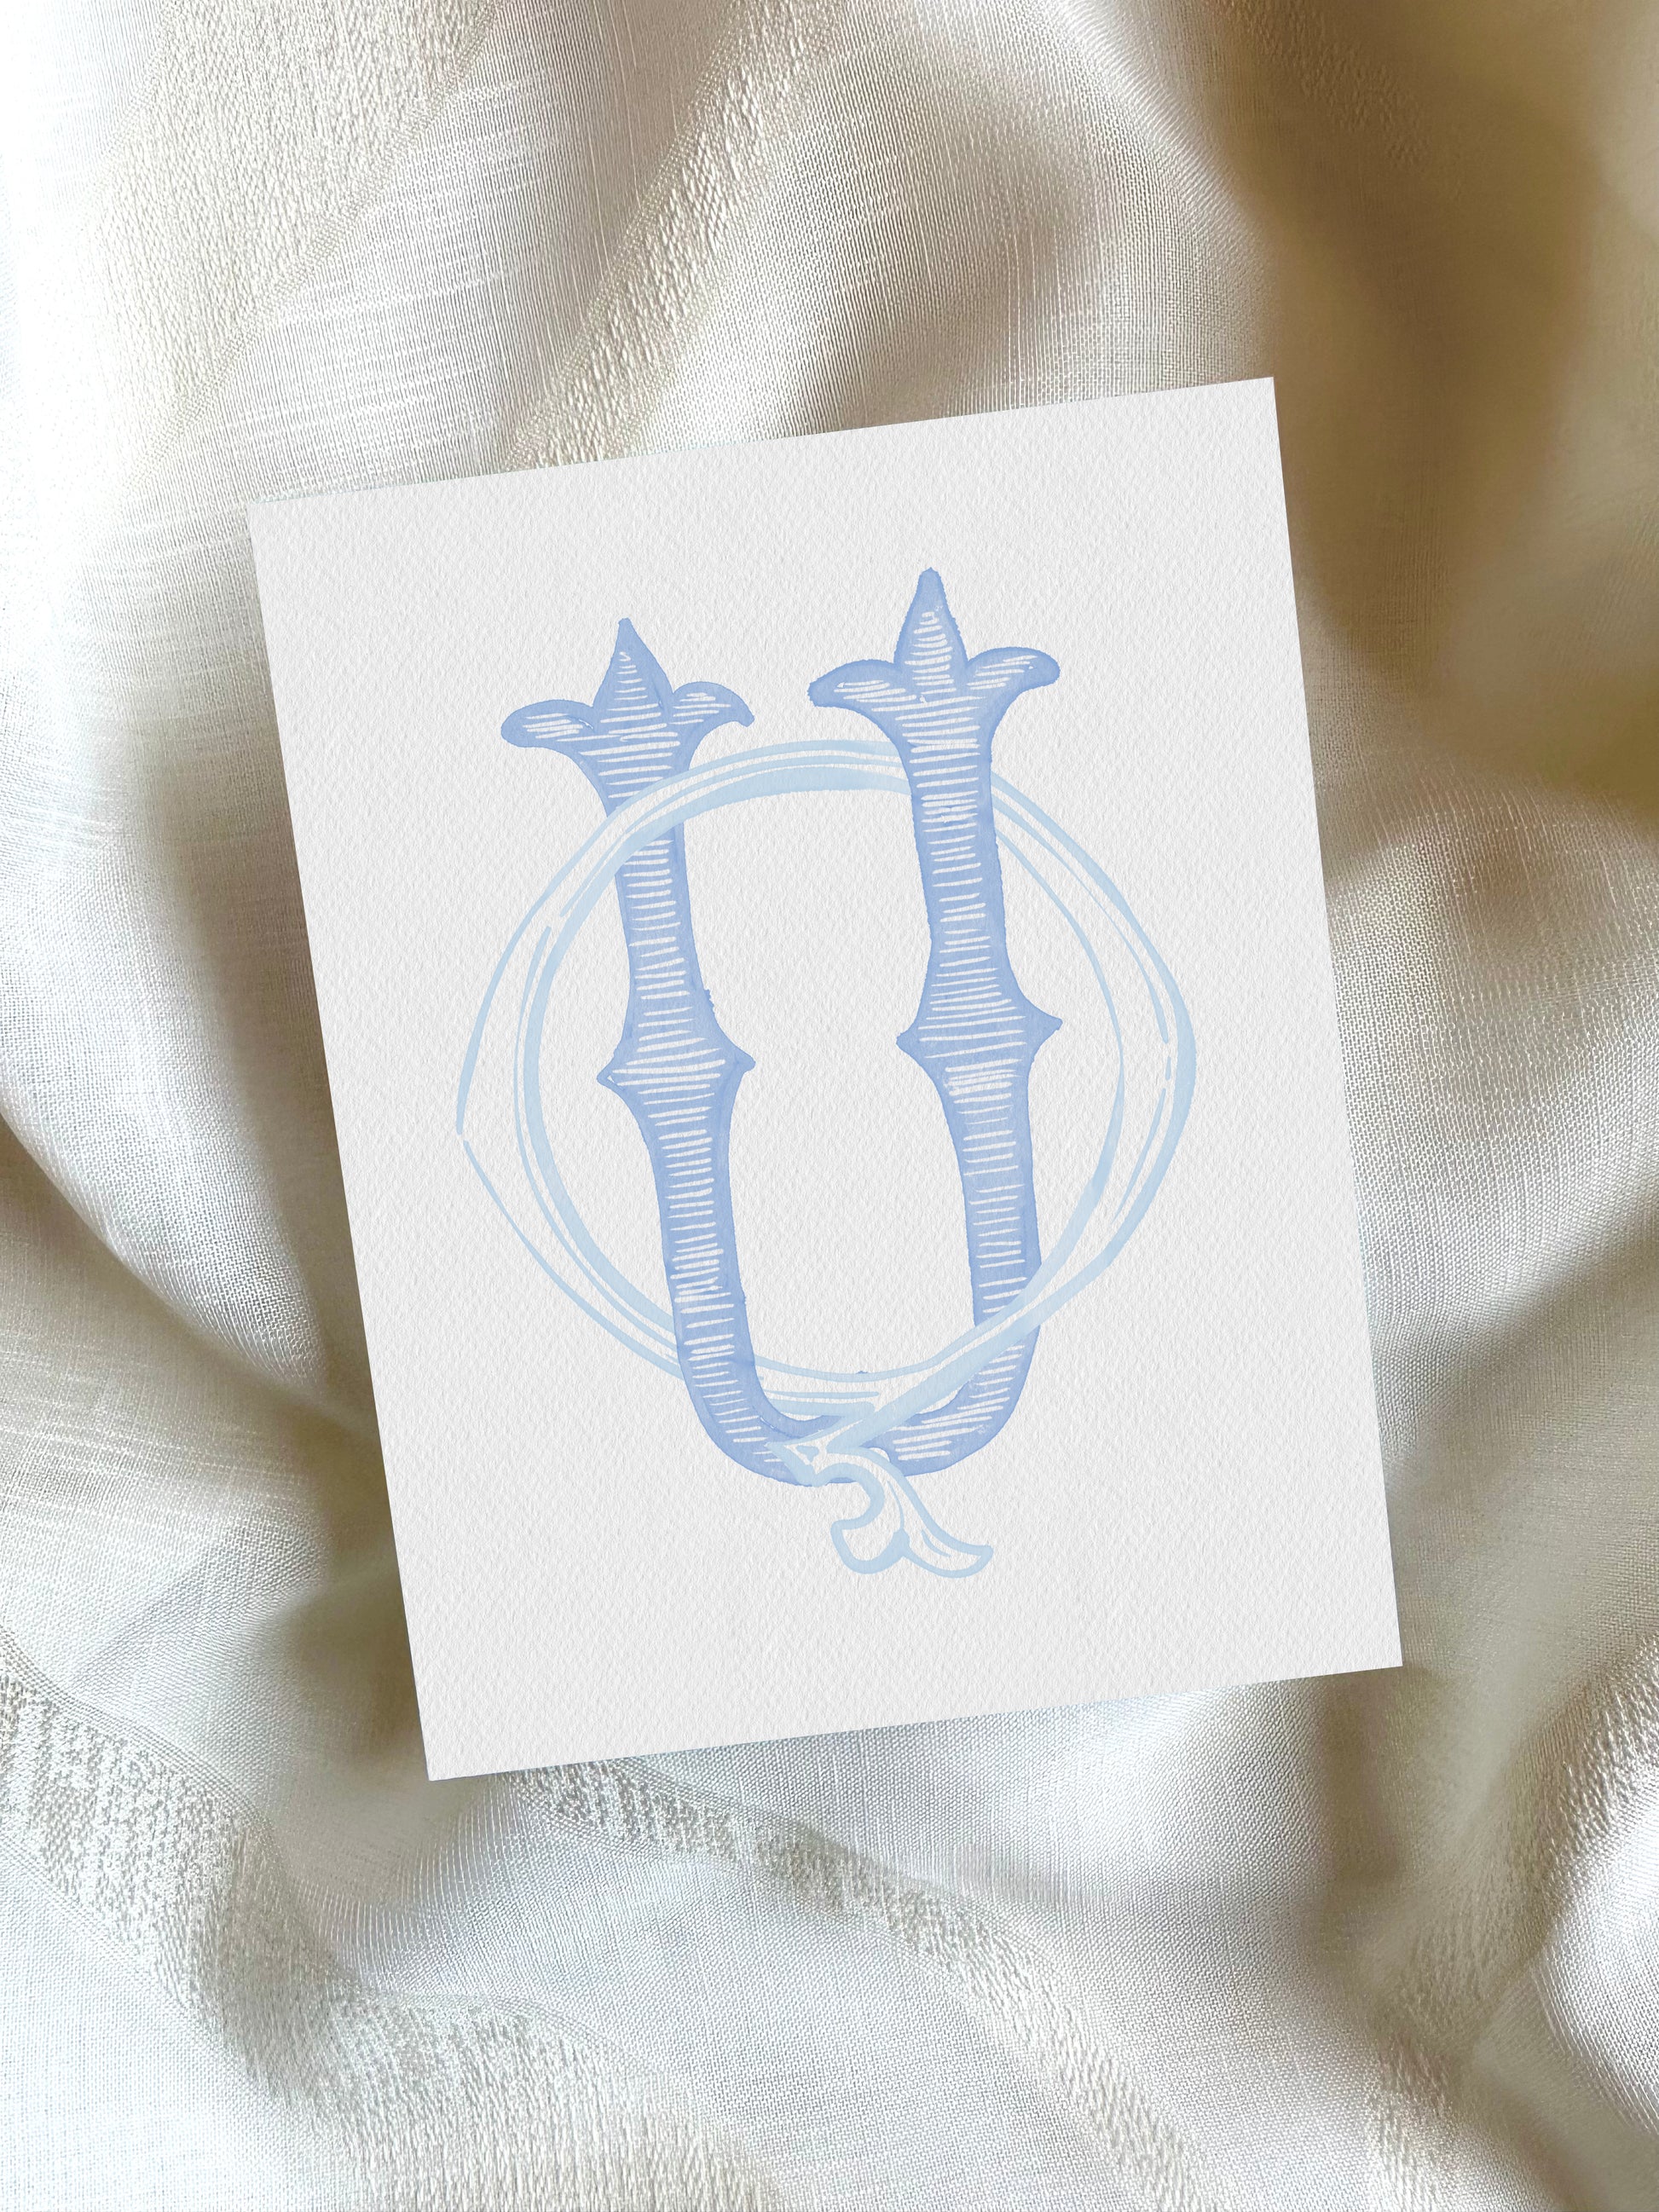 2 Letter Monogram with Letters QU UQ | Digital Download - Wedding Monogram SVG, Personal Logo, Wedding Logo for Wedding Invitations The Wedding Crest Lab